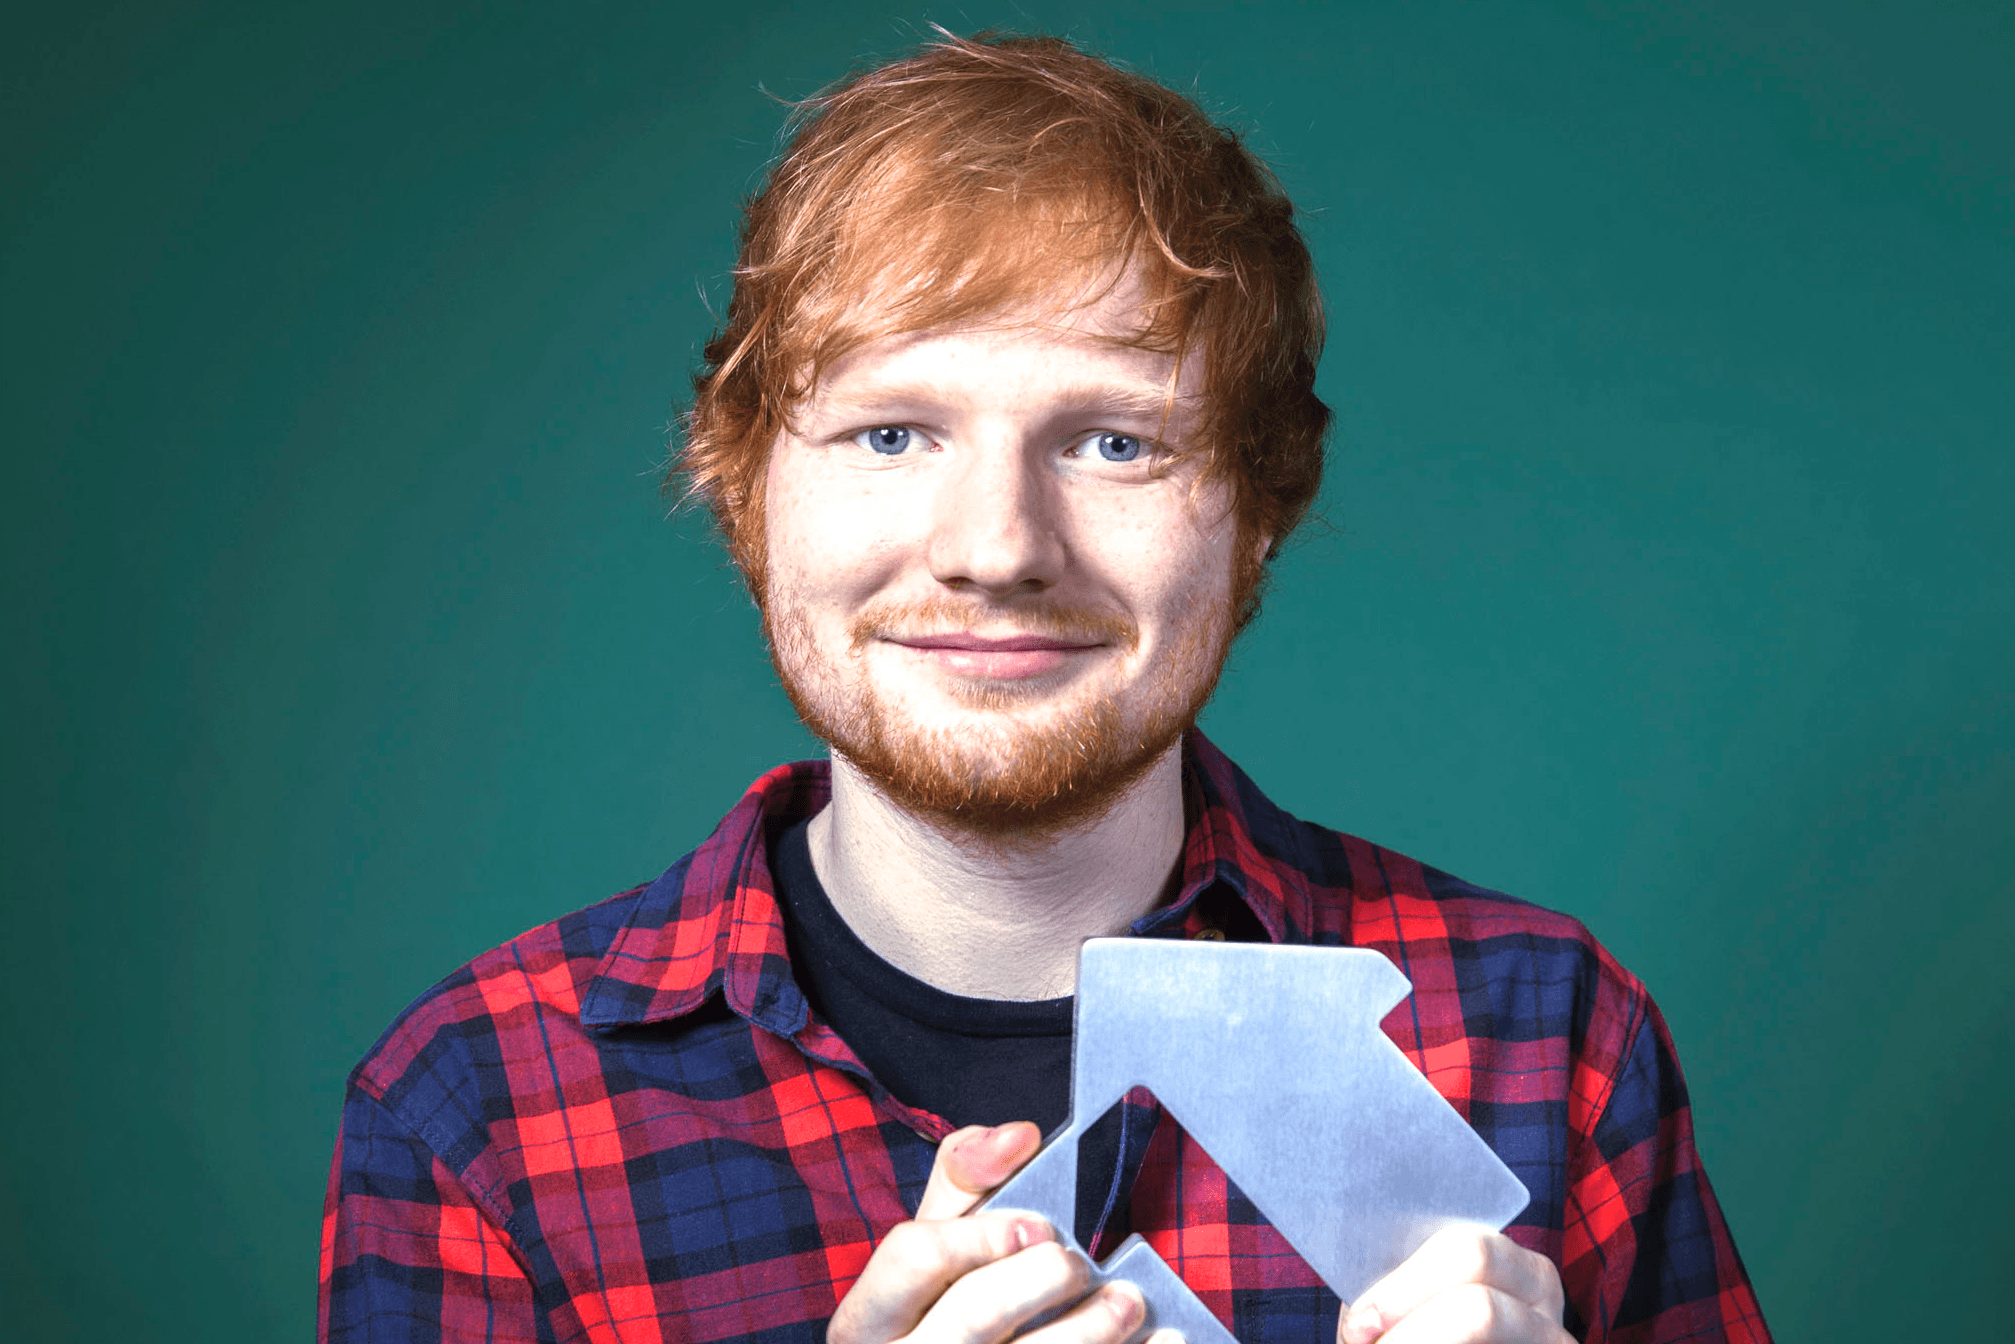 Ed Sheeran Wallpaper High Quality